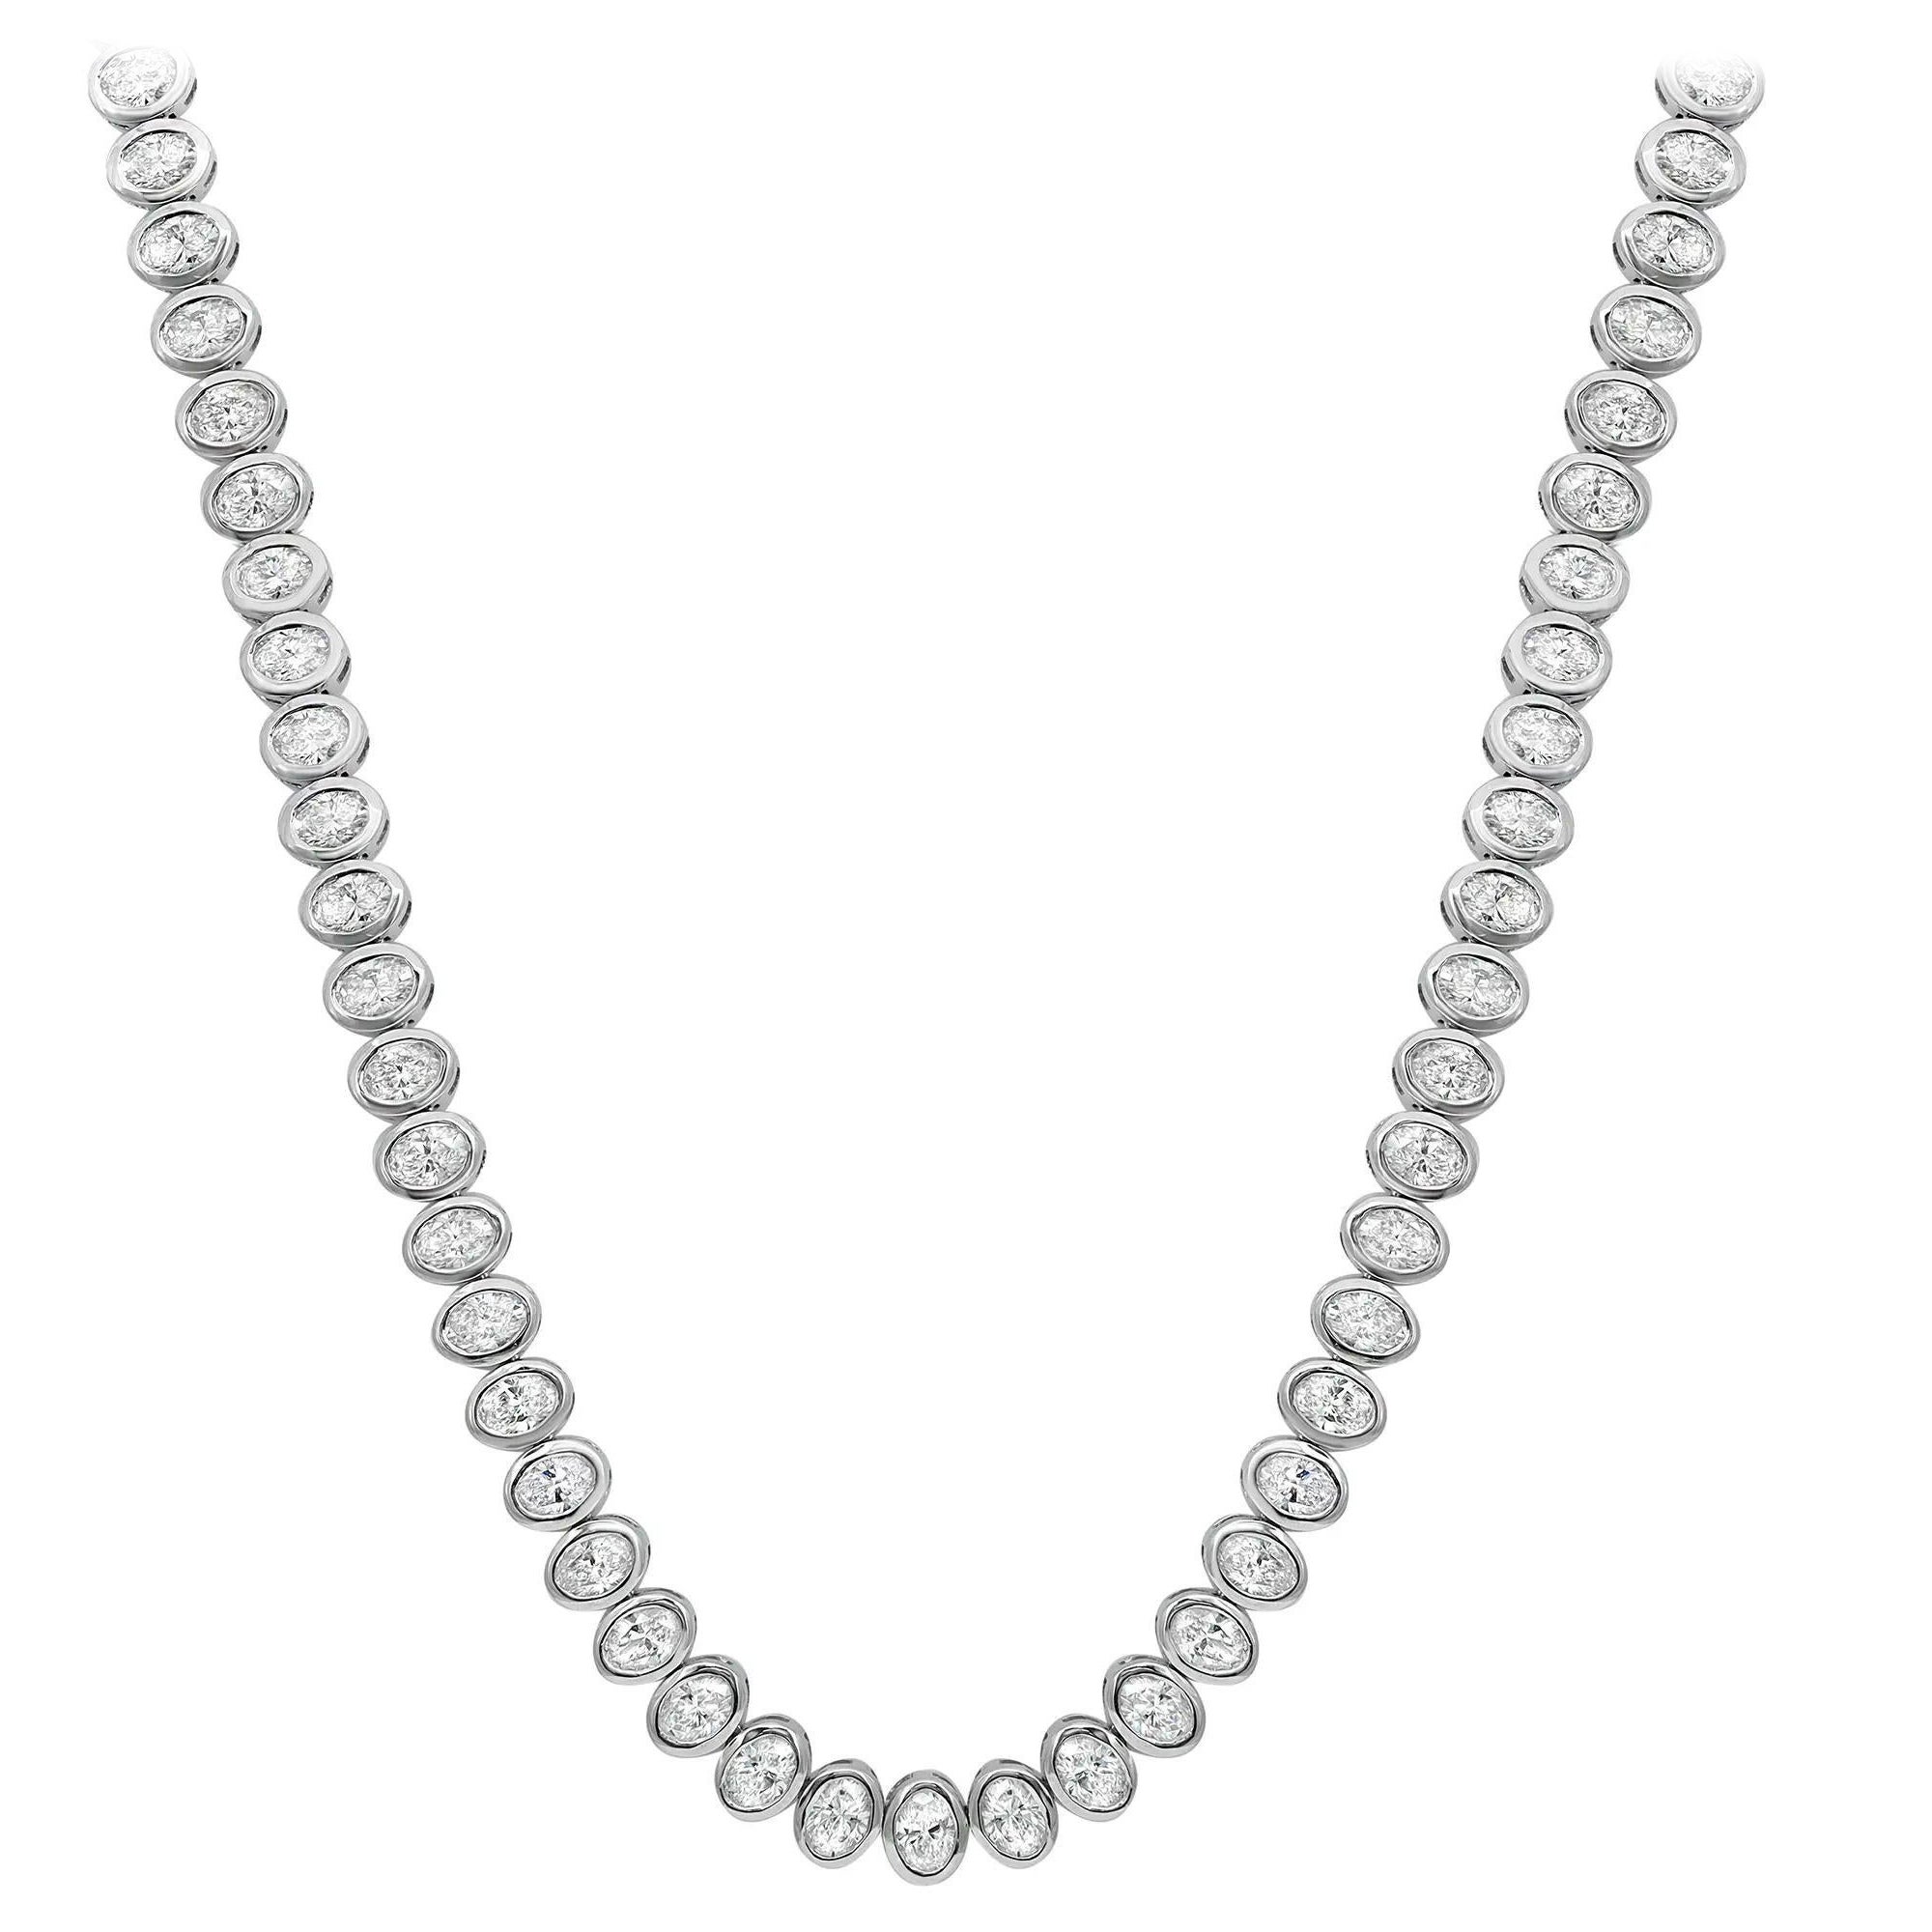 Bezel Set Oval Cut Diamond Tennis Necklace 18K White Gold 7.94Cttw 17 Inches